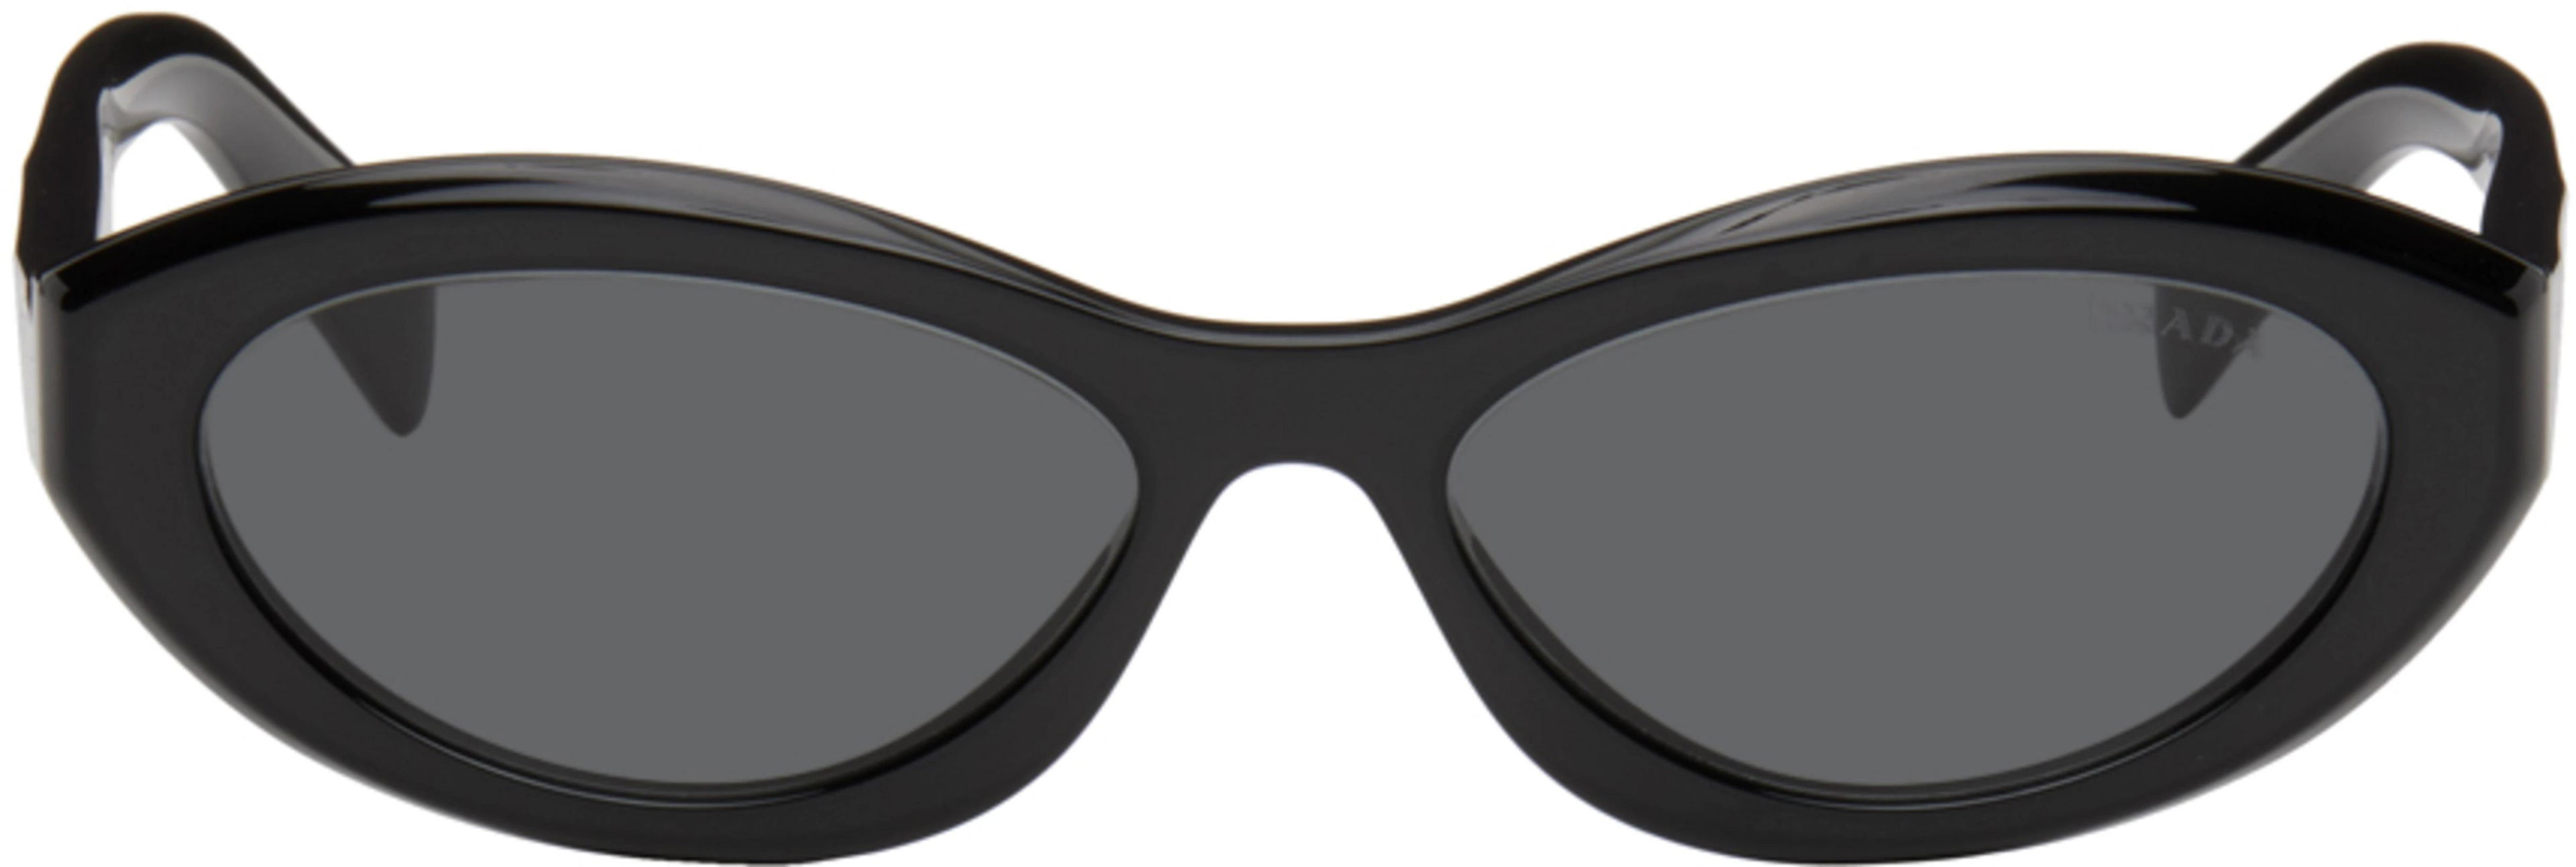 Black Symbole Sunglasses by PRADA